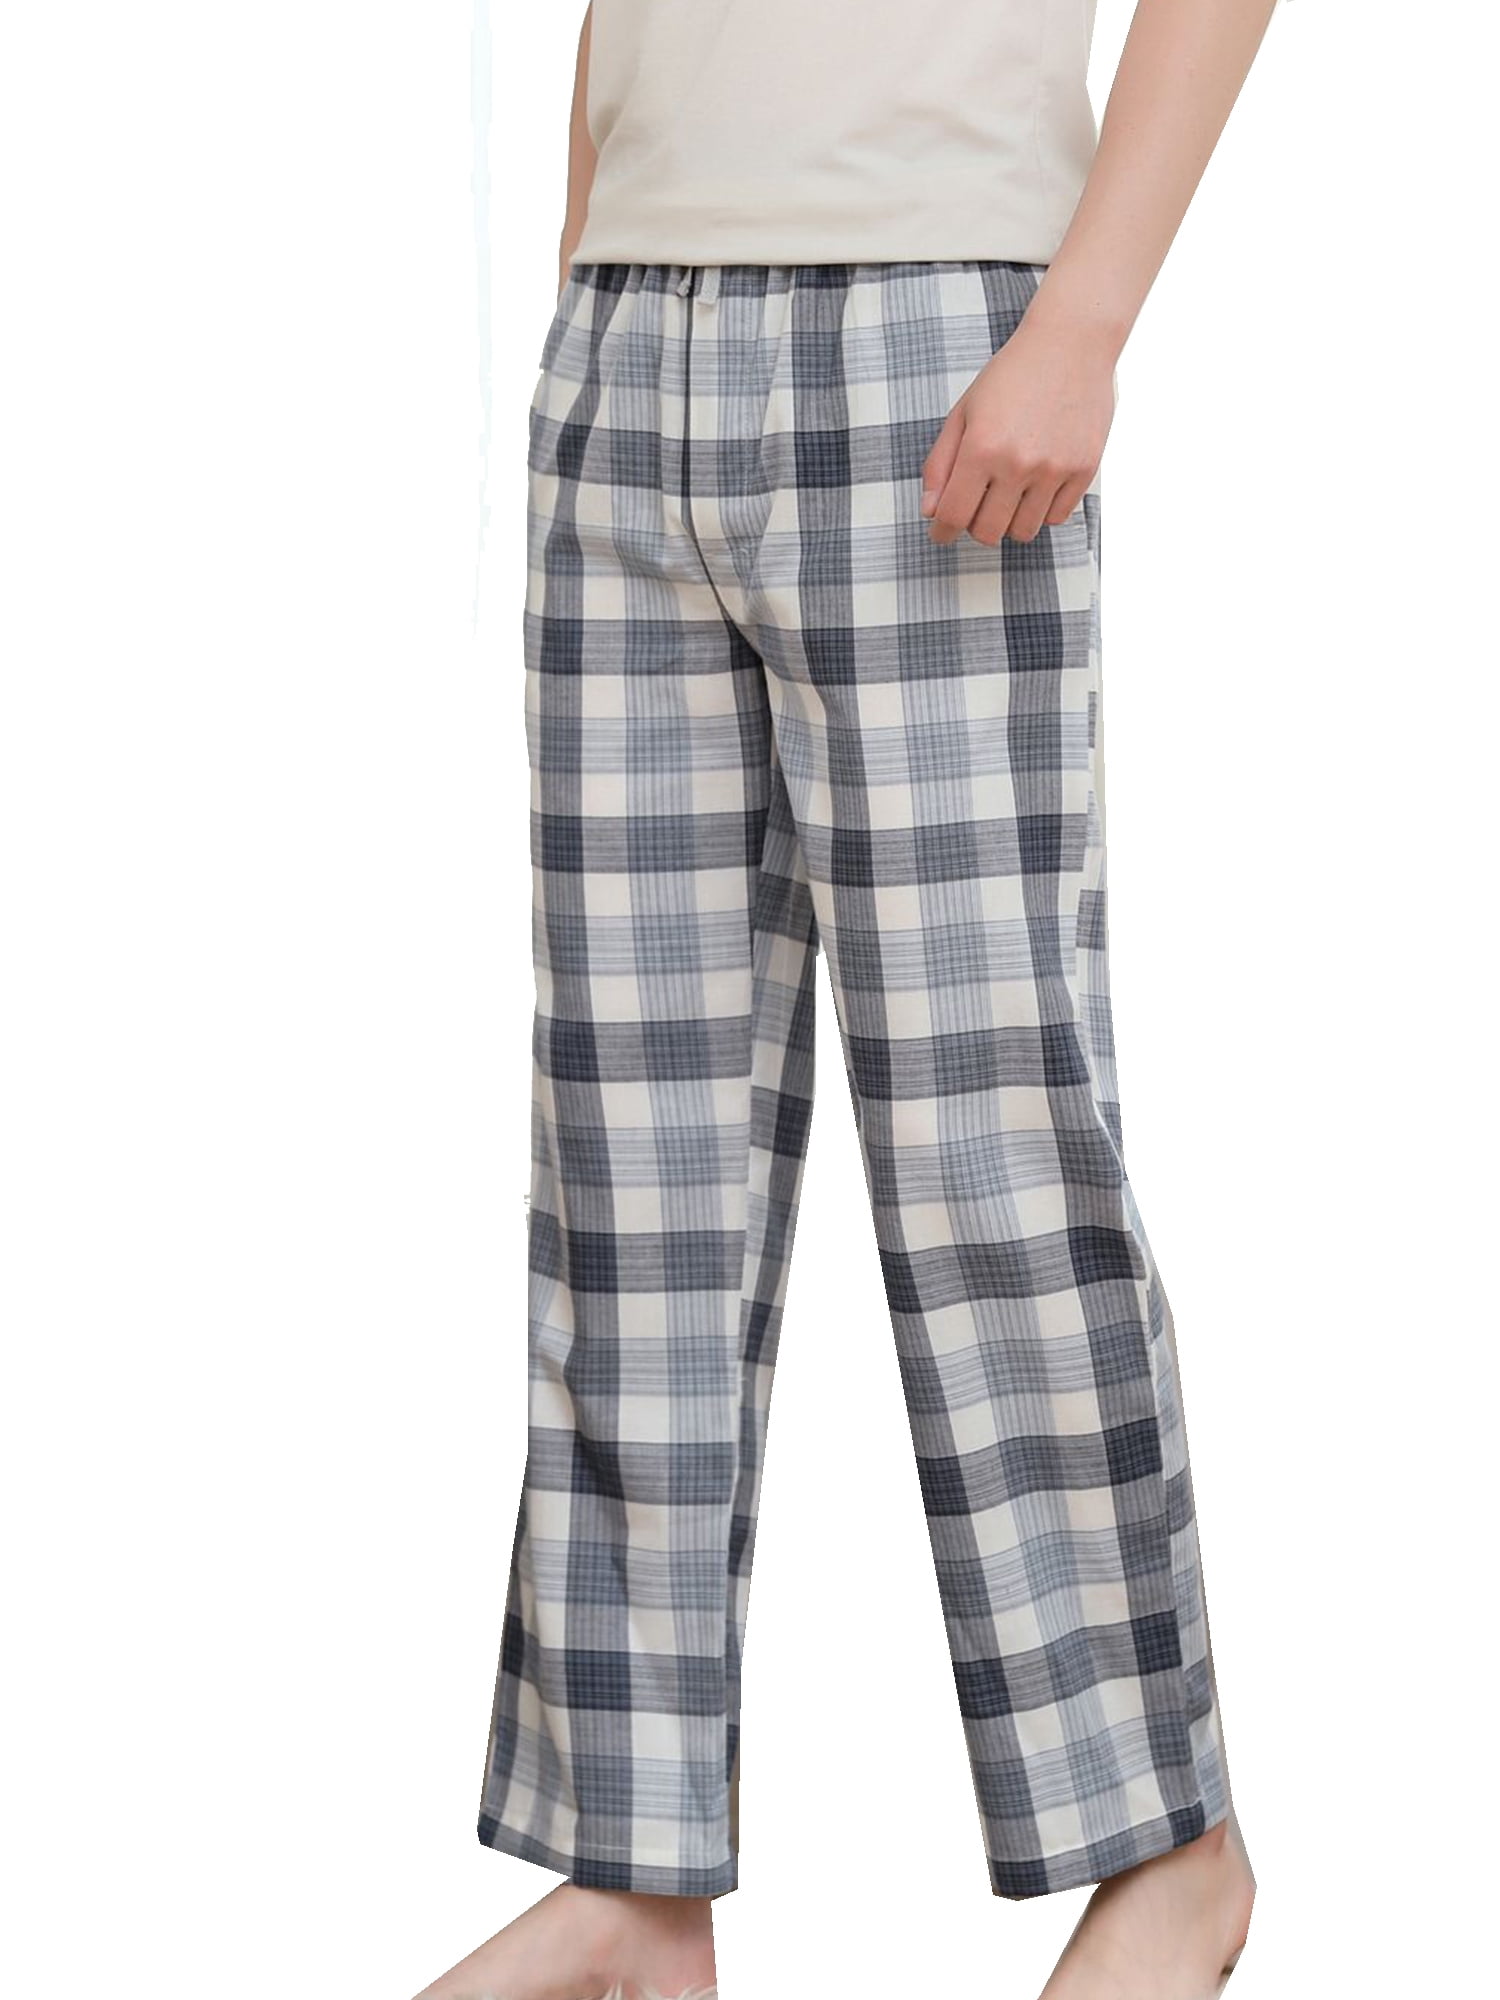 New Mens Pyjama Bottom Cotton Woven Check Pyjama Sleeping PJs Blue Bottom Pants